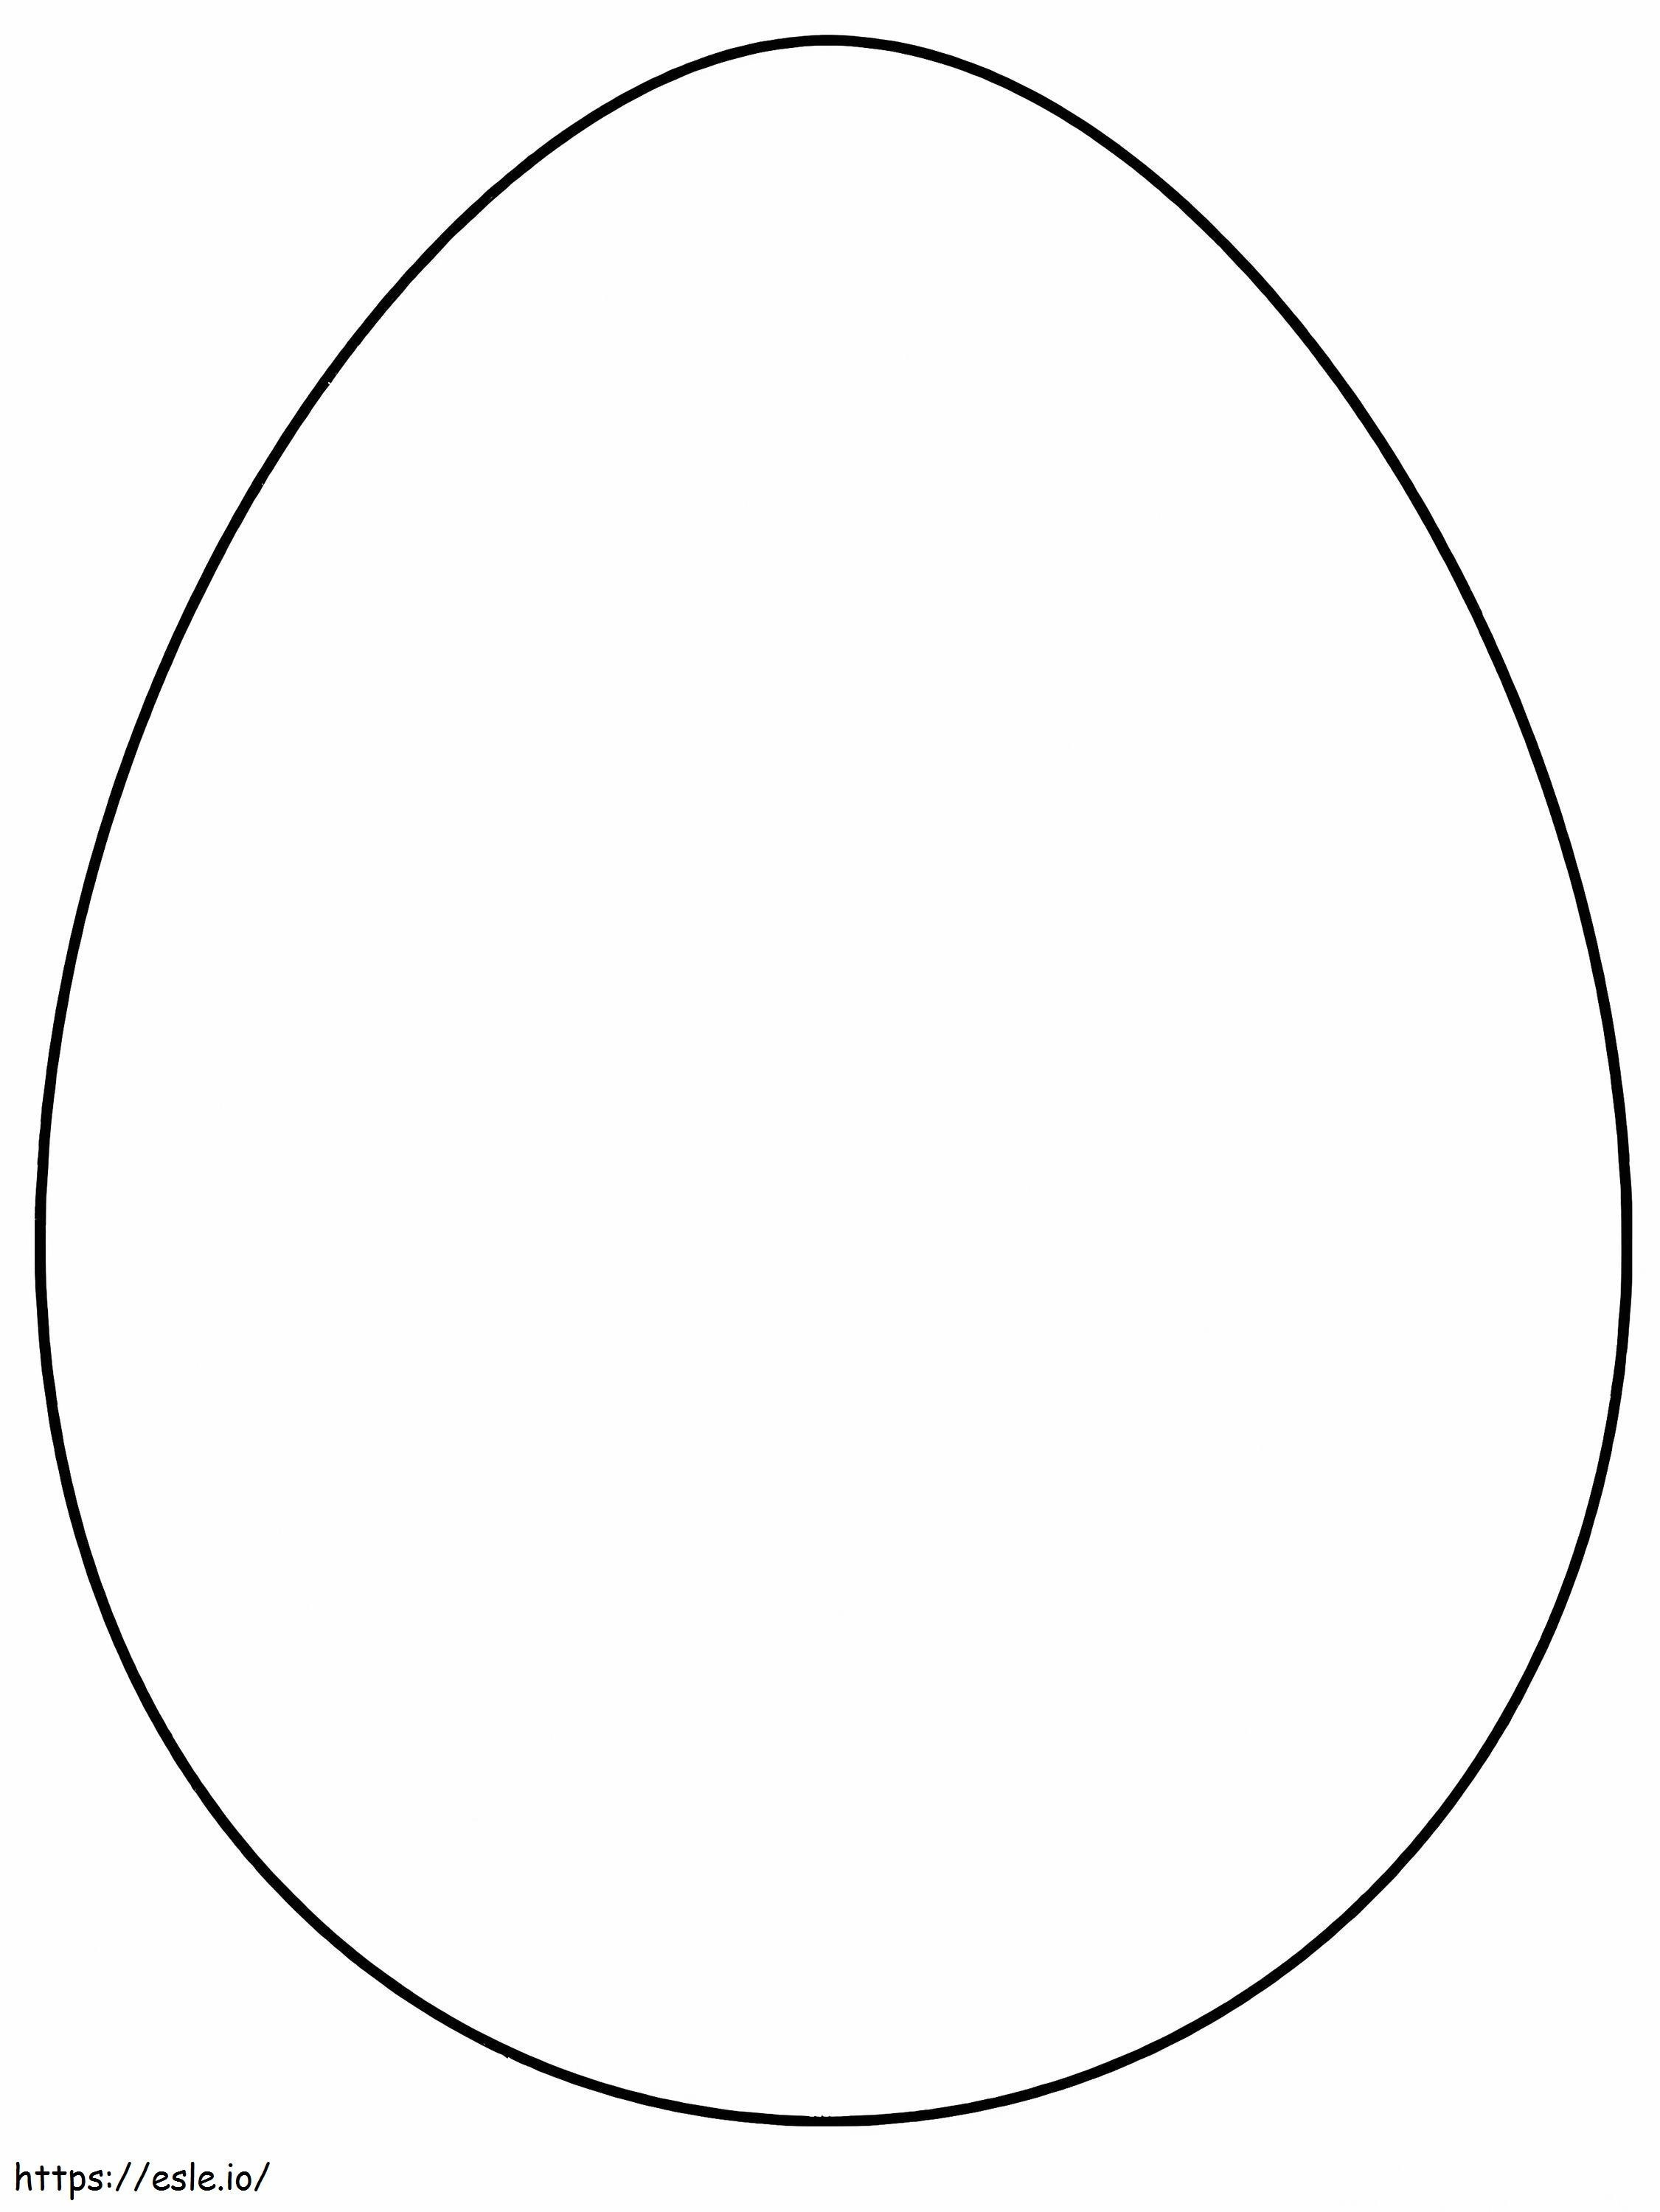 Plain Egg coloring page